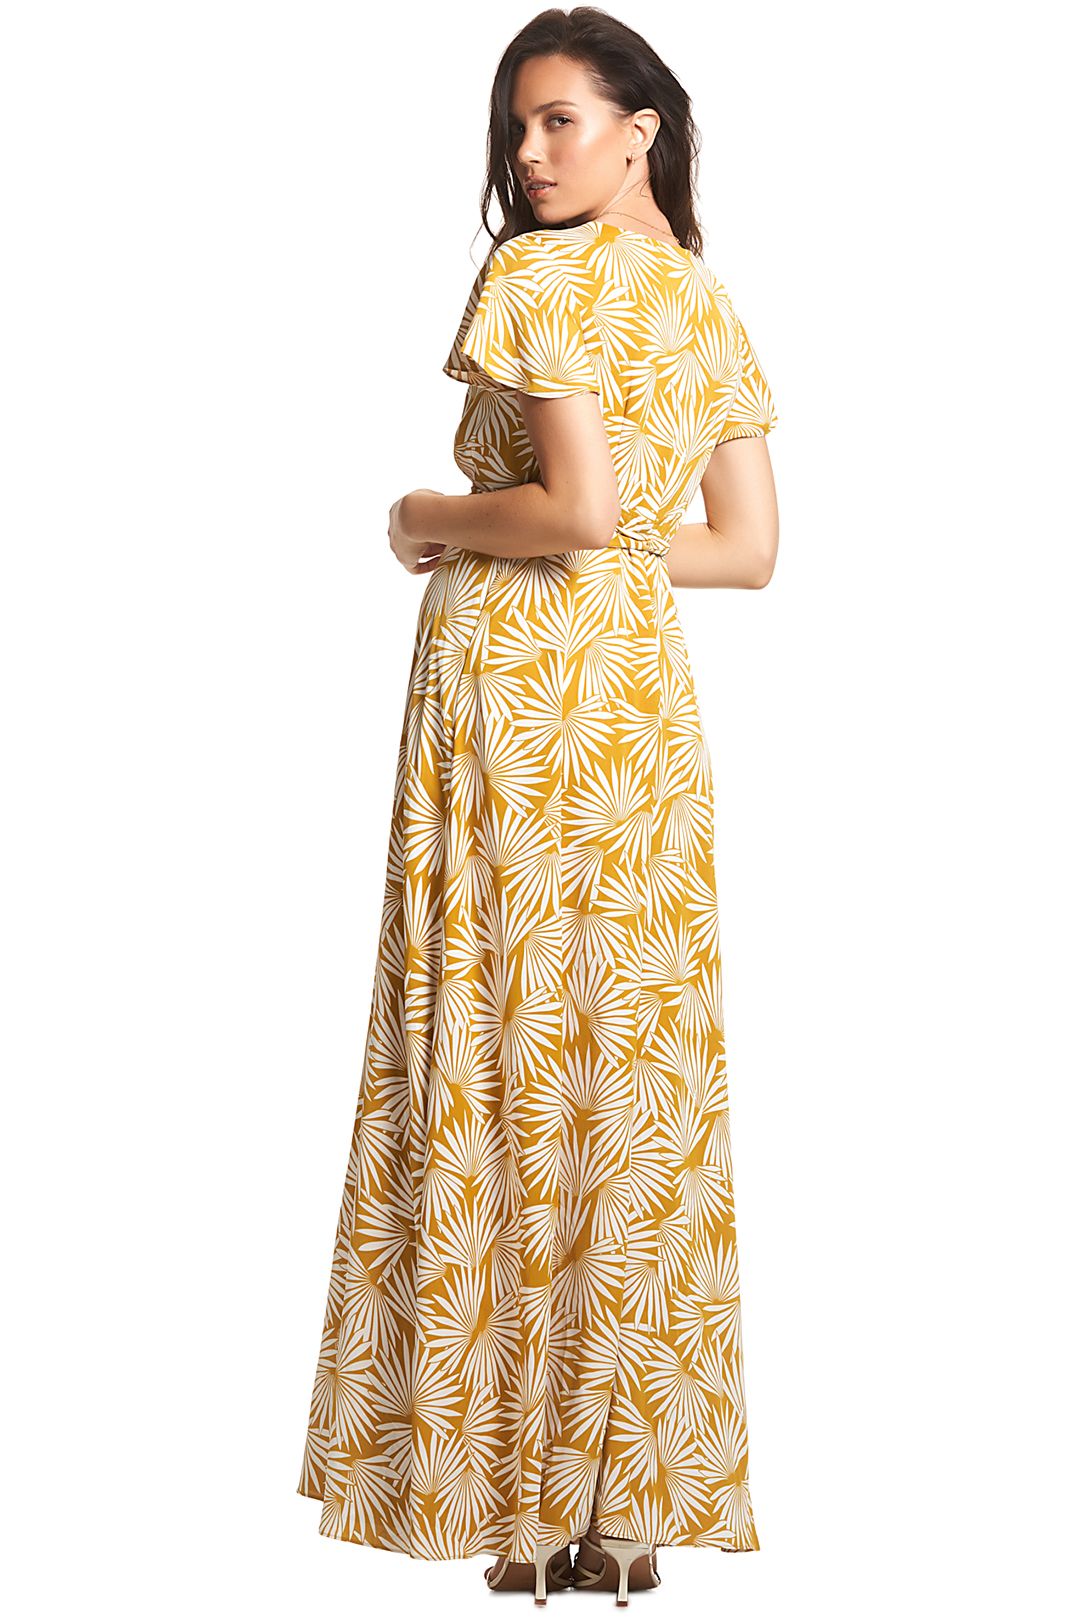 Soon-Maternity-Elizabeth-Maxi-Dress-Yellow-Sun-Print-Back